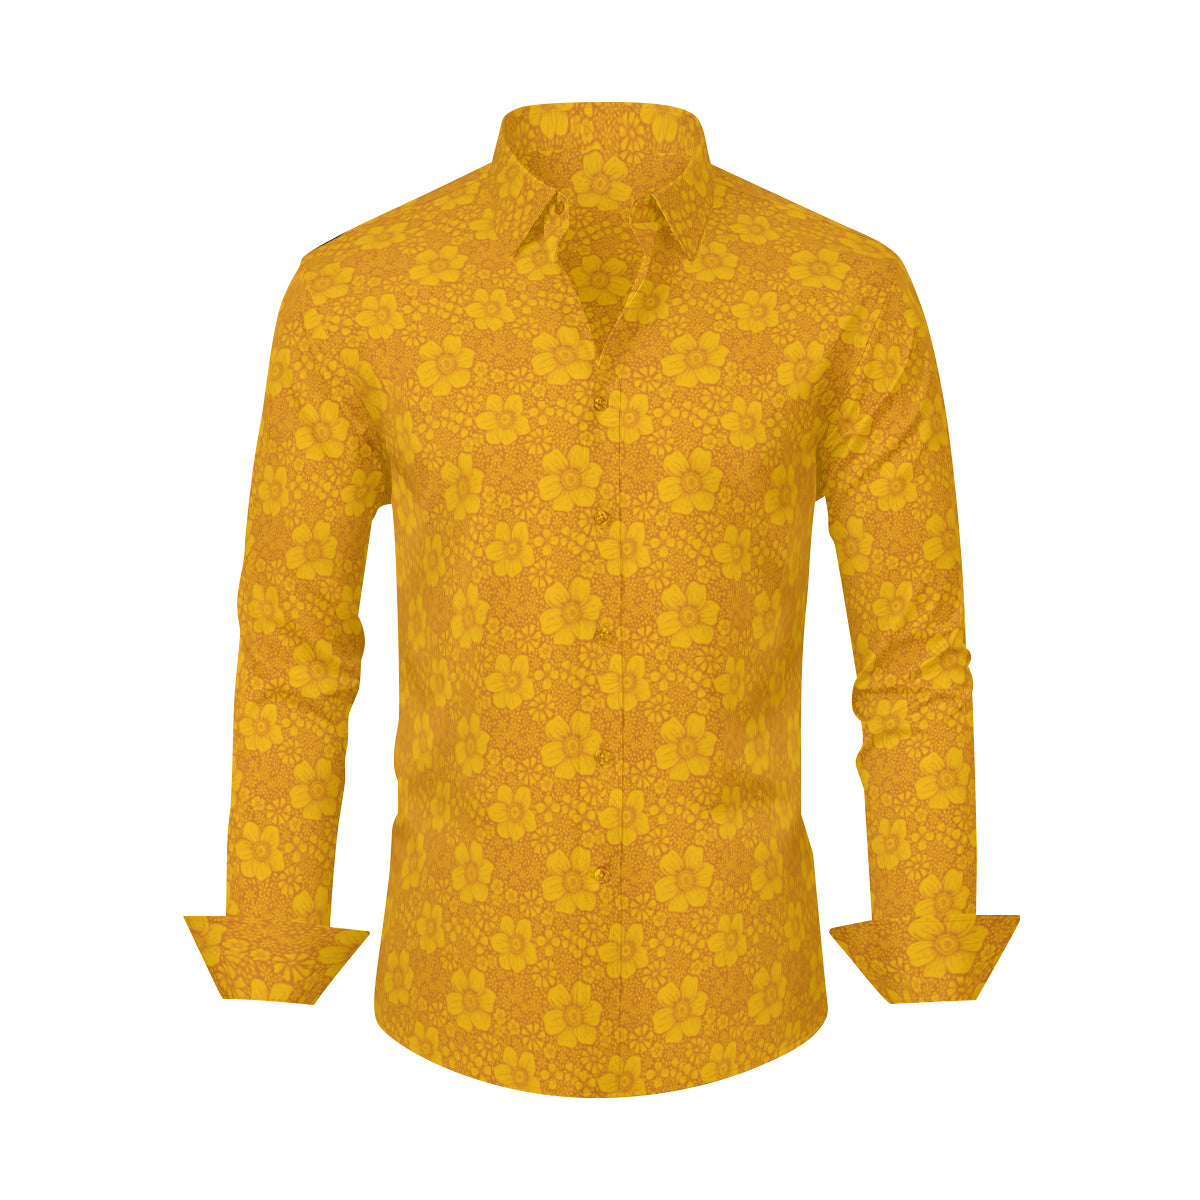 70s Shirt Style, Hippie Shirt Men, Floral Boho Shirt Men, Mustard Yellow Shirt Men, Mustard Yellow Top Men, Floral Yellow Shirt, Mustard Top